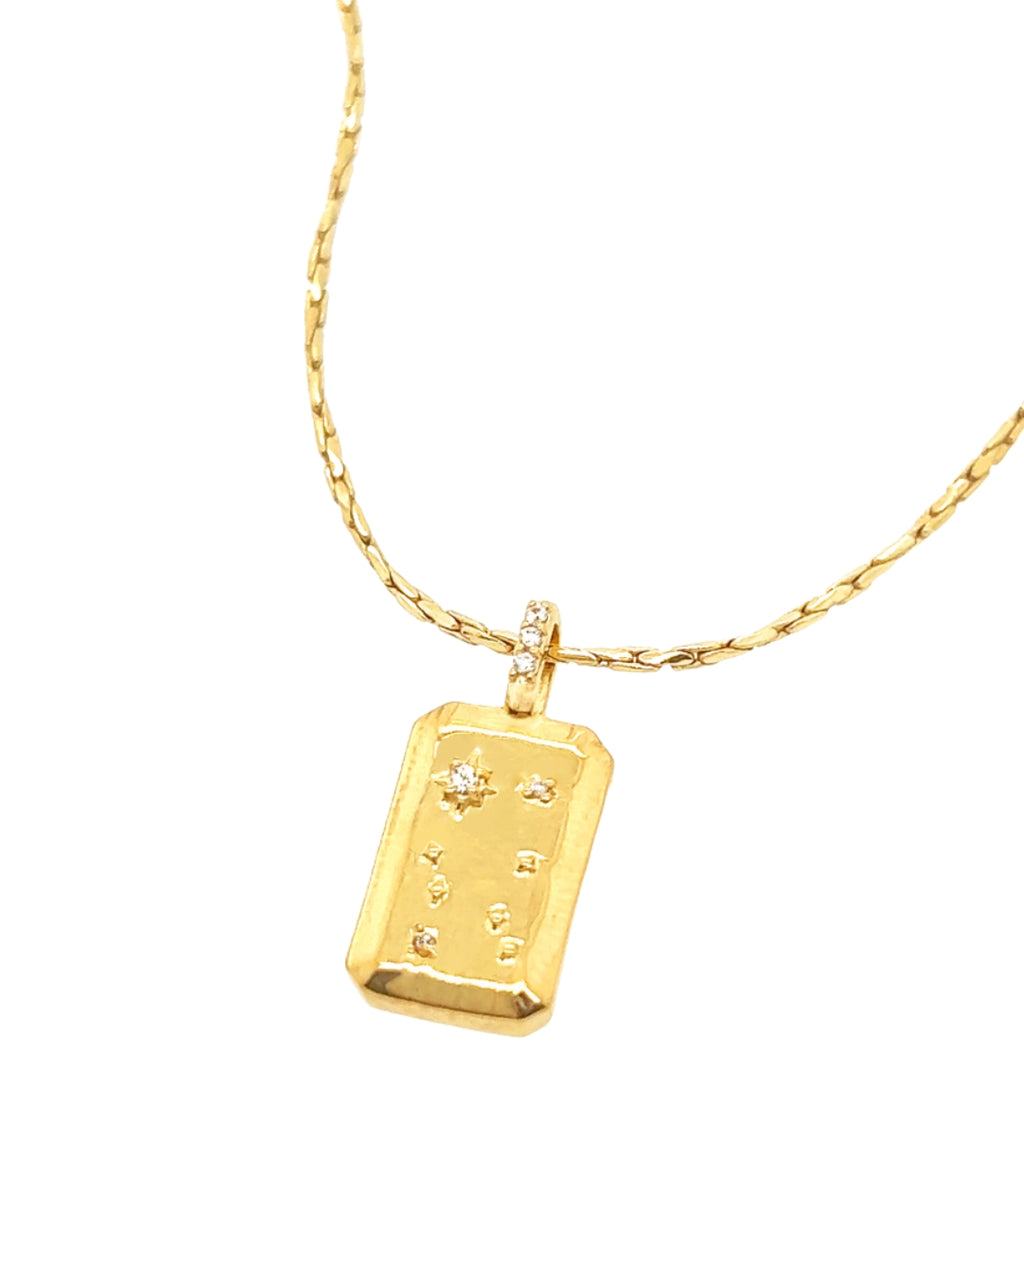 Gold Gemini Constellation Zodiac Pendant on a Gold Necklace Chain